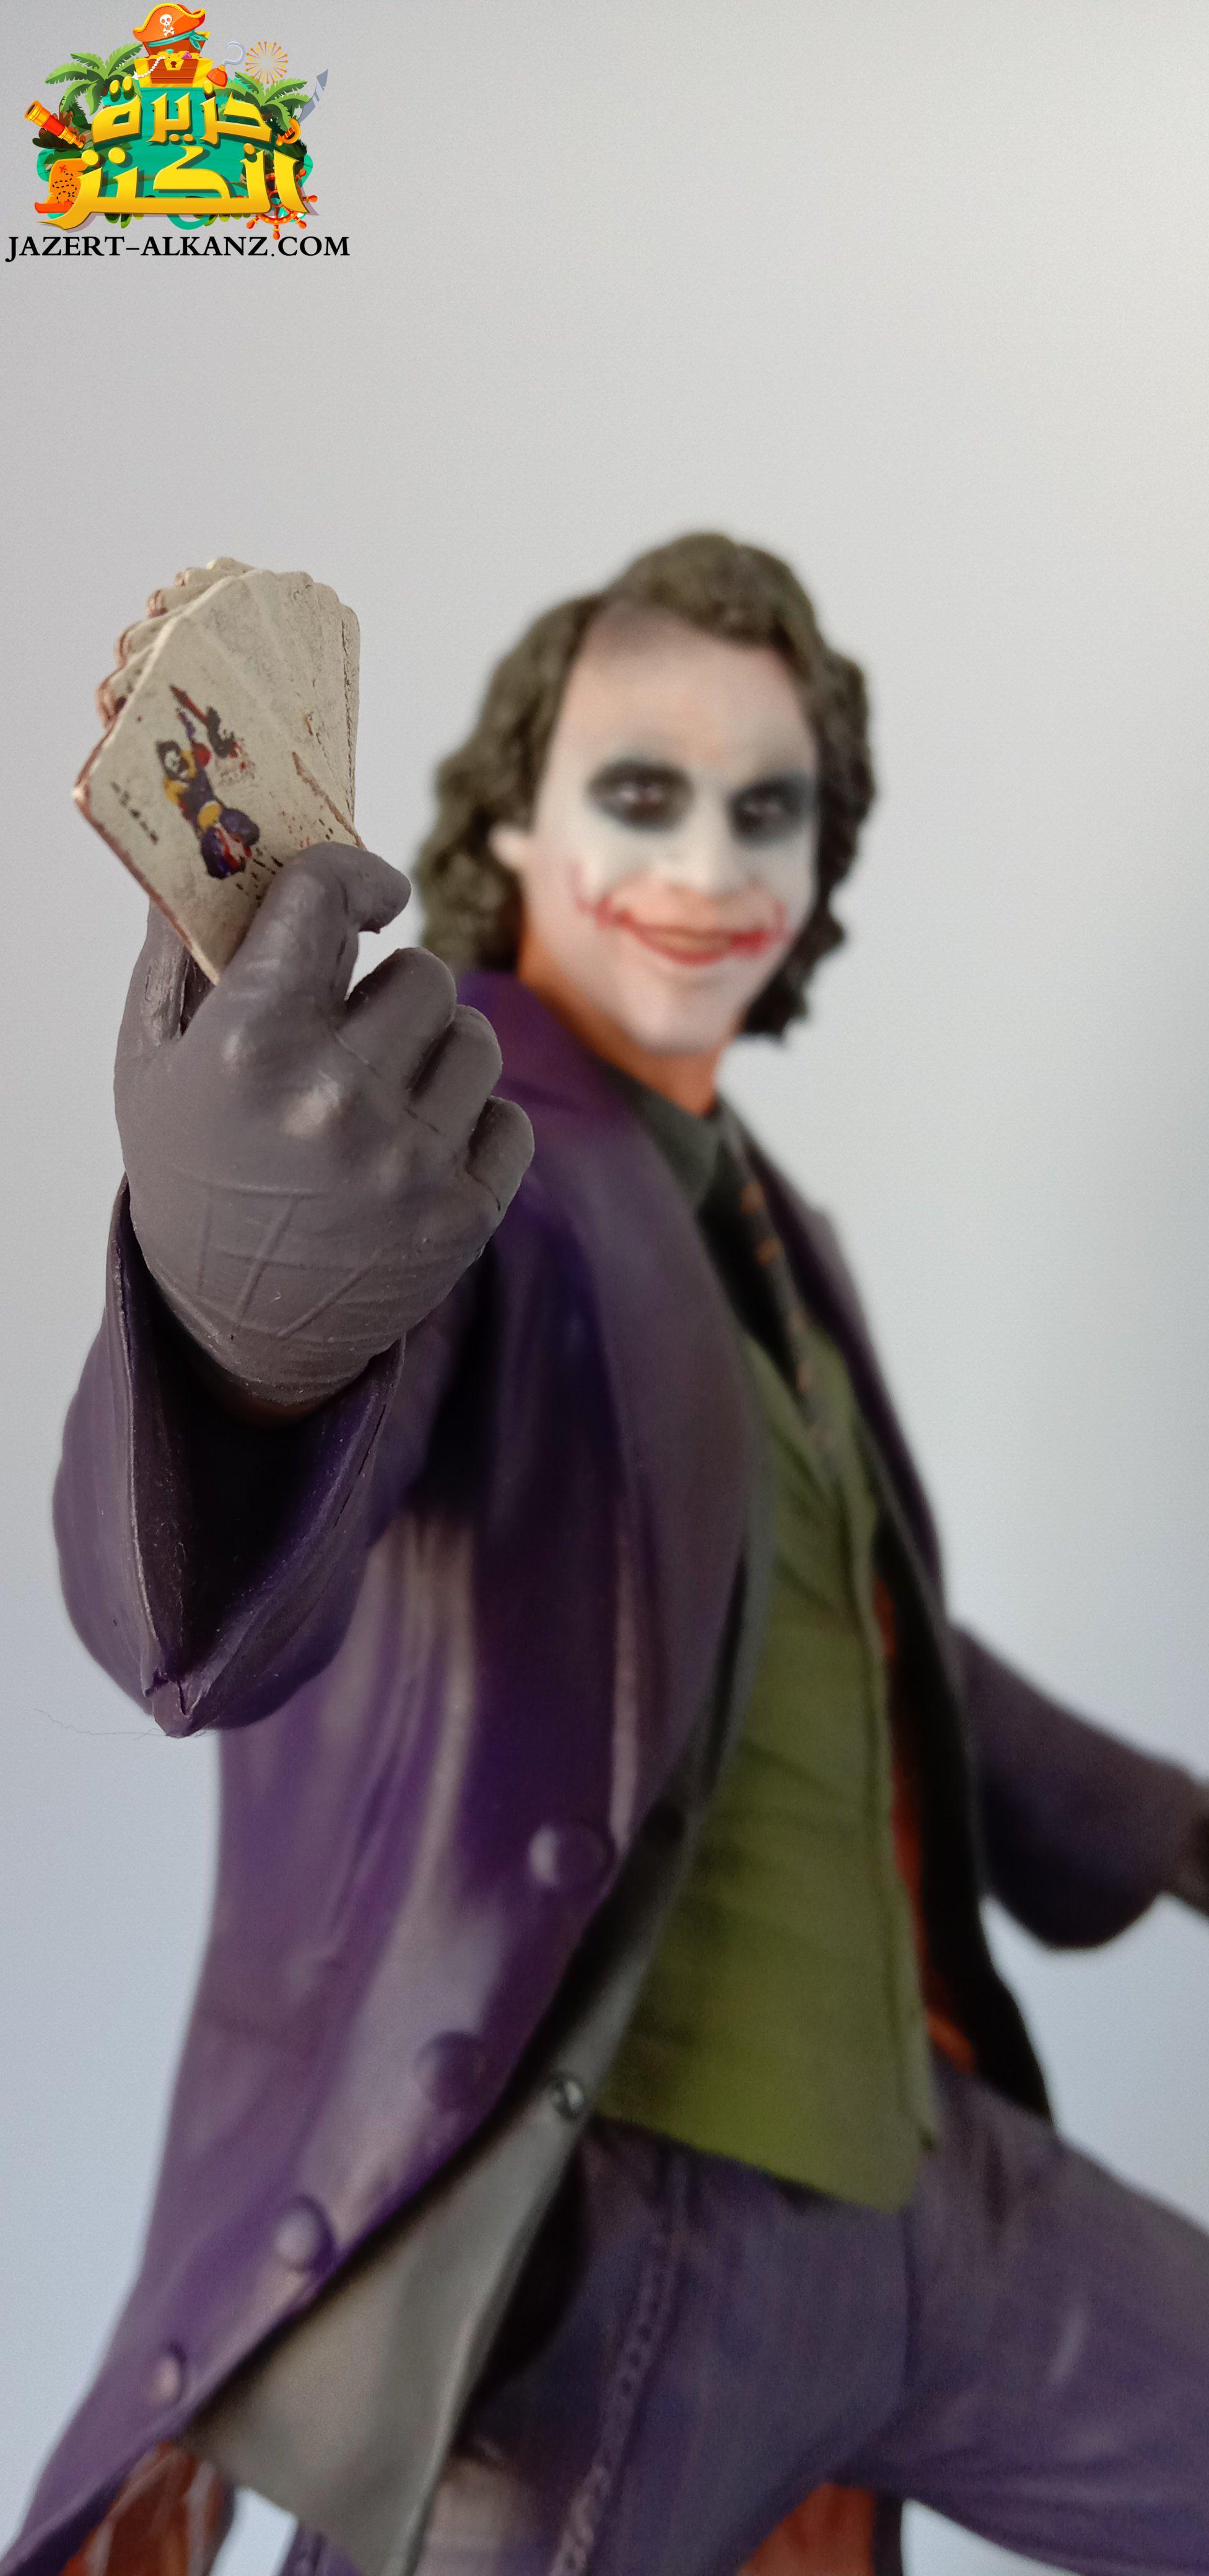 The Joker Figures Movies مجسم الجوكر جوكر.